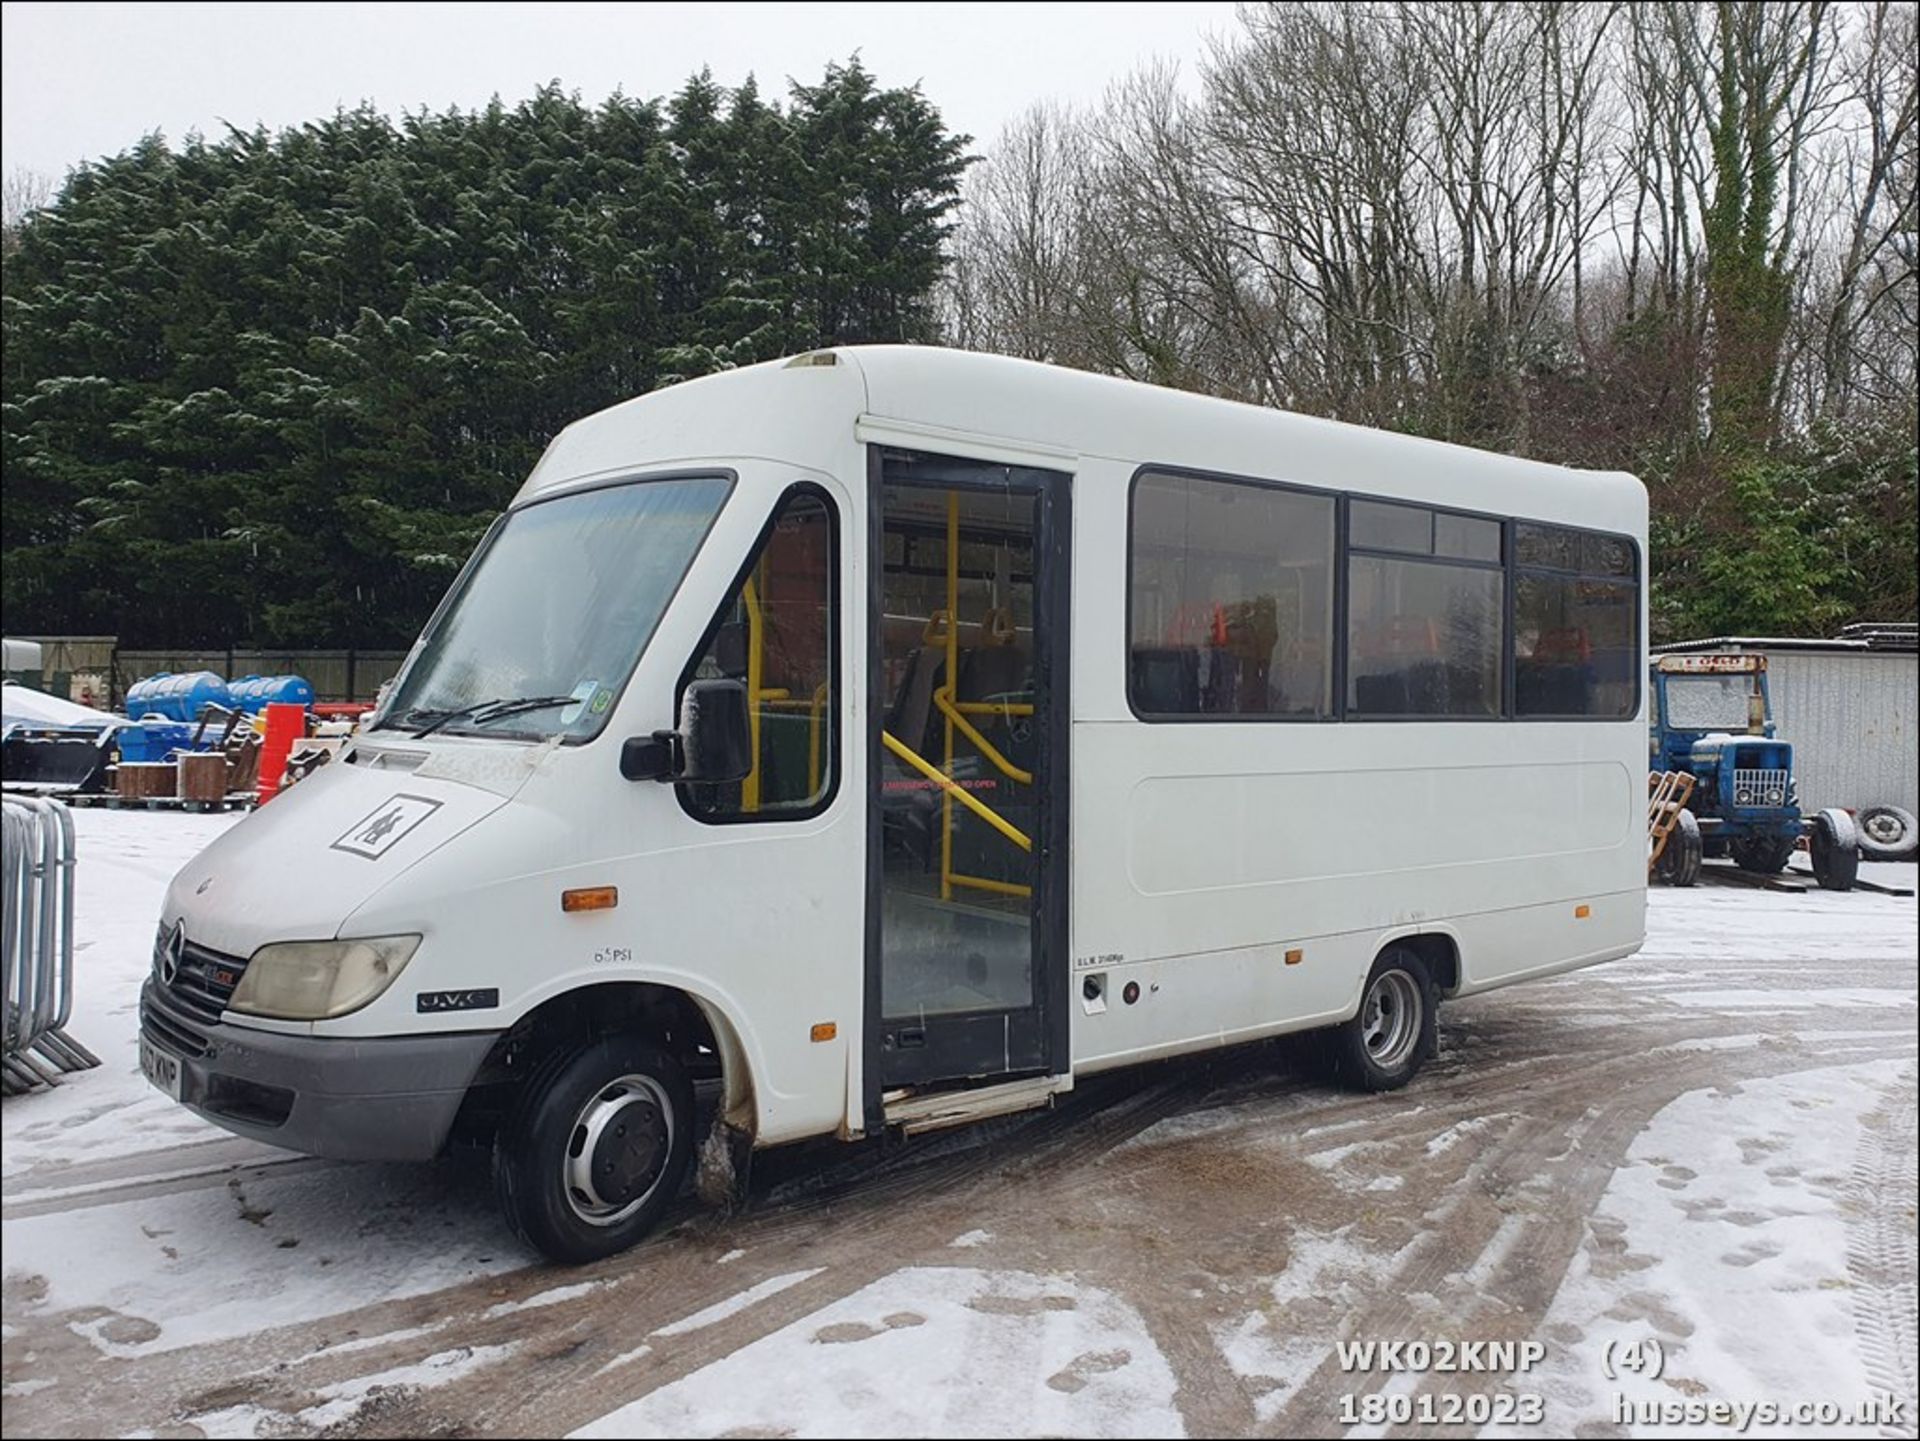 02/02 MERCEDES SPRINTER 413 CDI - 2151cc 2dr Minibus (White, 415k) - Image 5 of 15